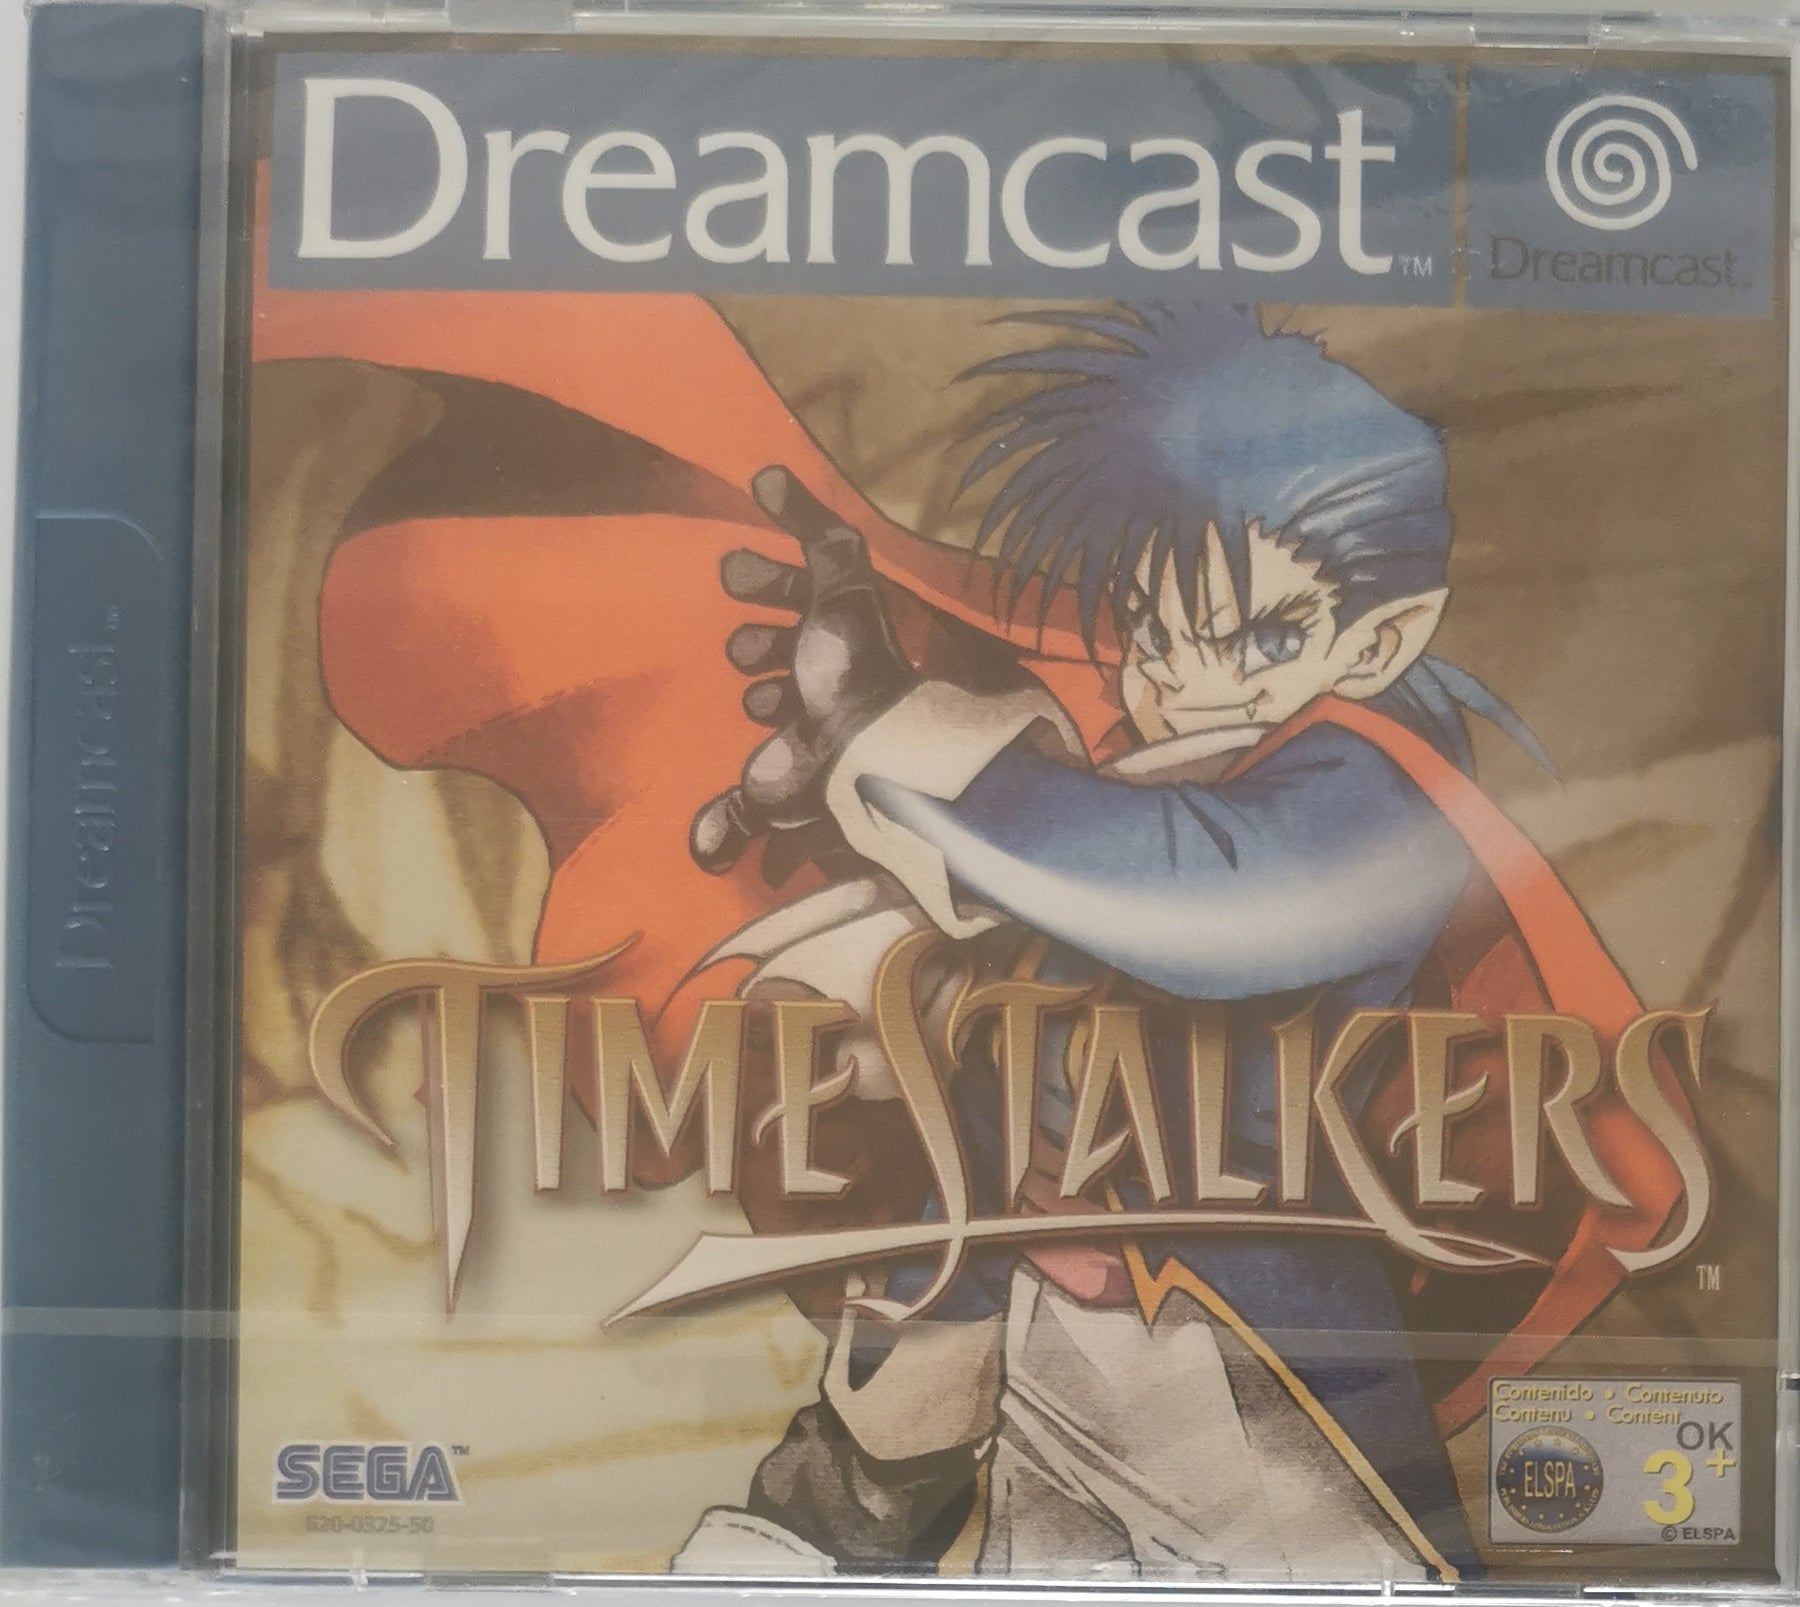 Time Stalkers Dreamcast [Neu]